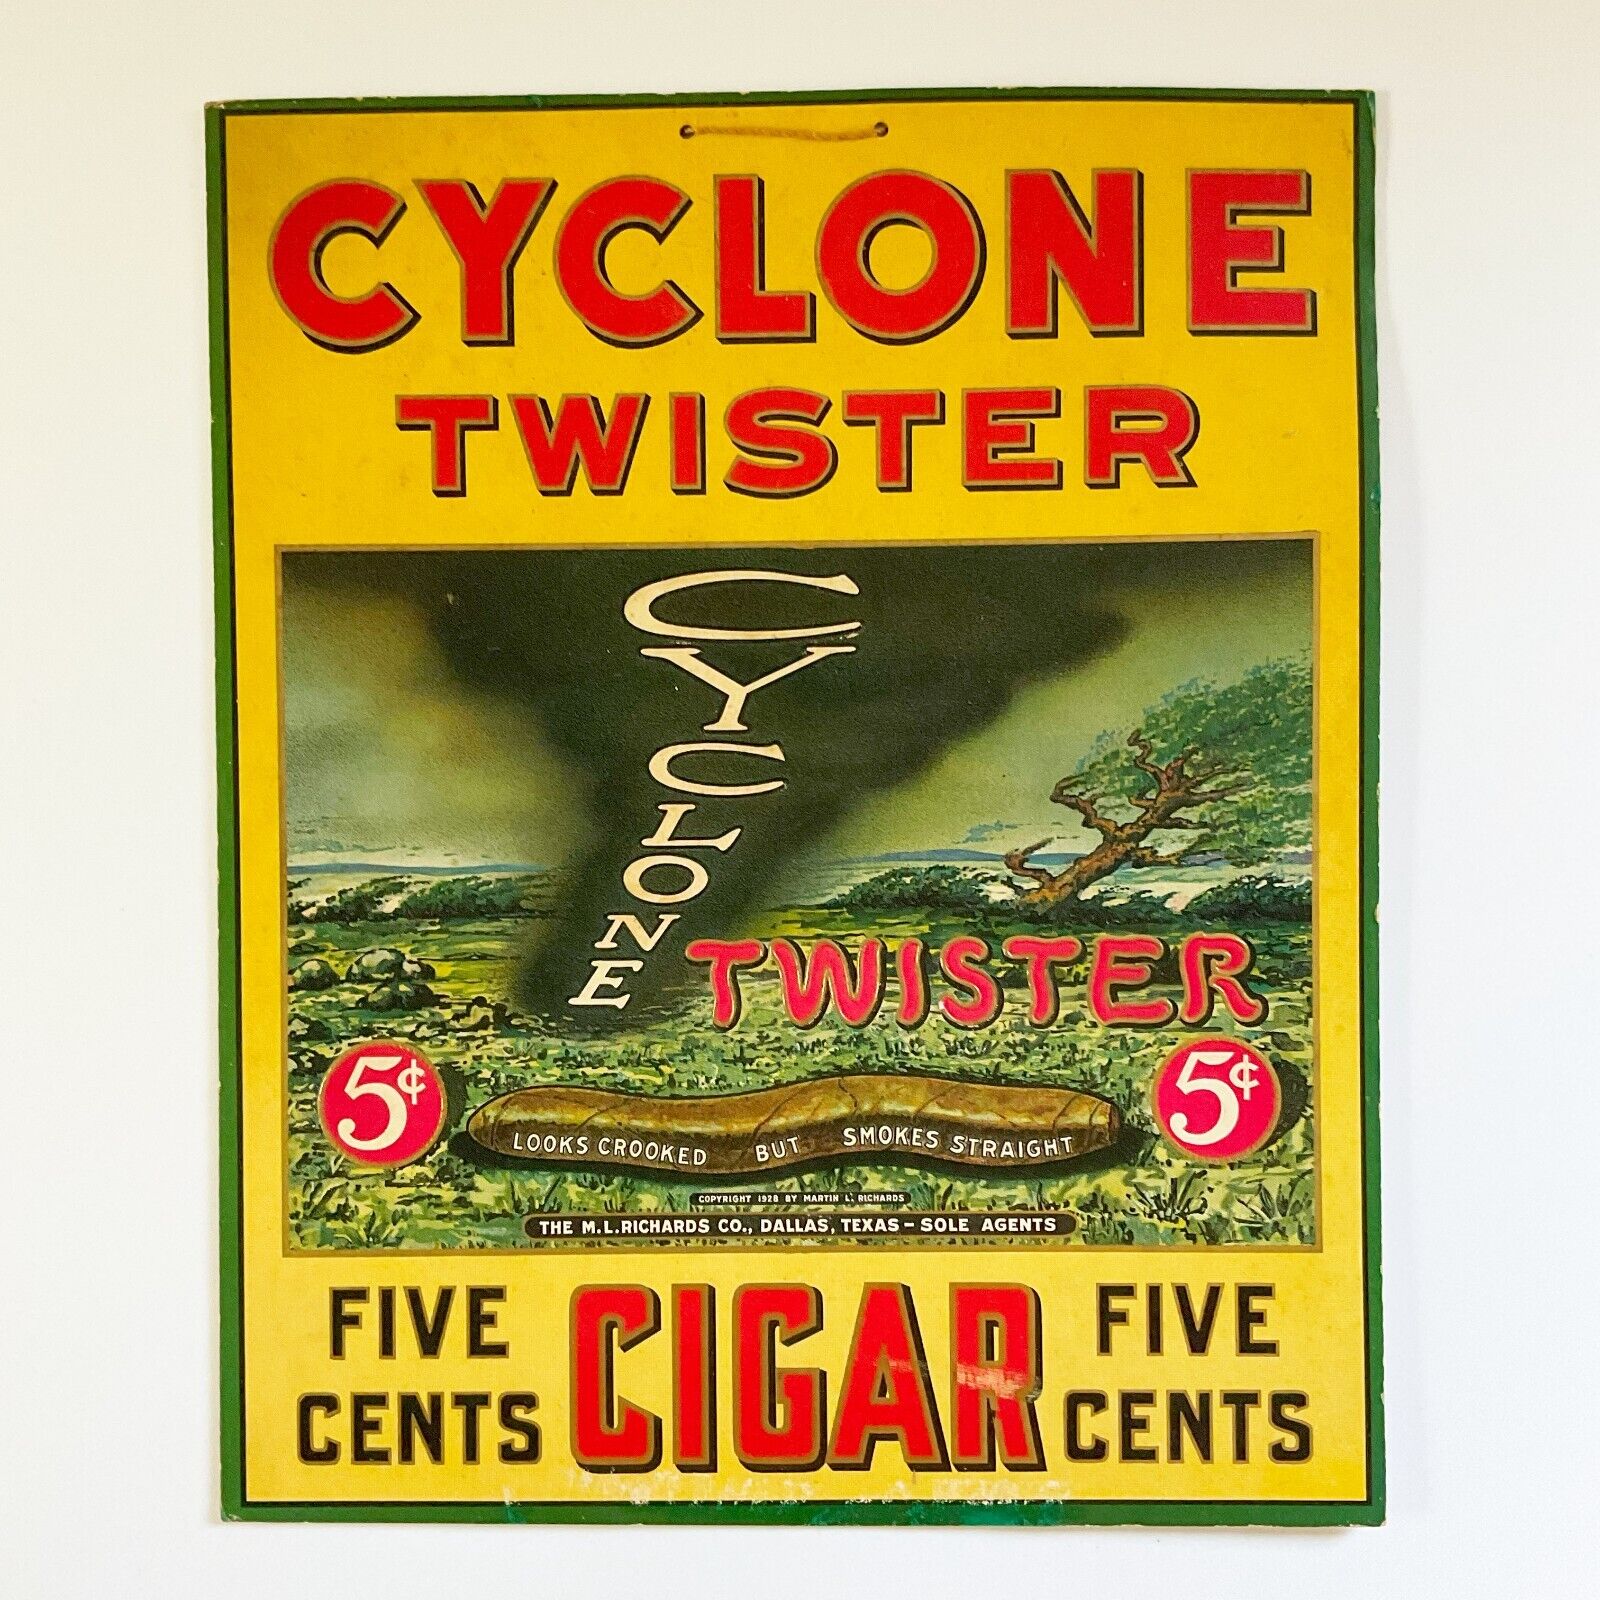 Cyclone Twister Cigar Five Cents Cardboard Sign Original Vintage